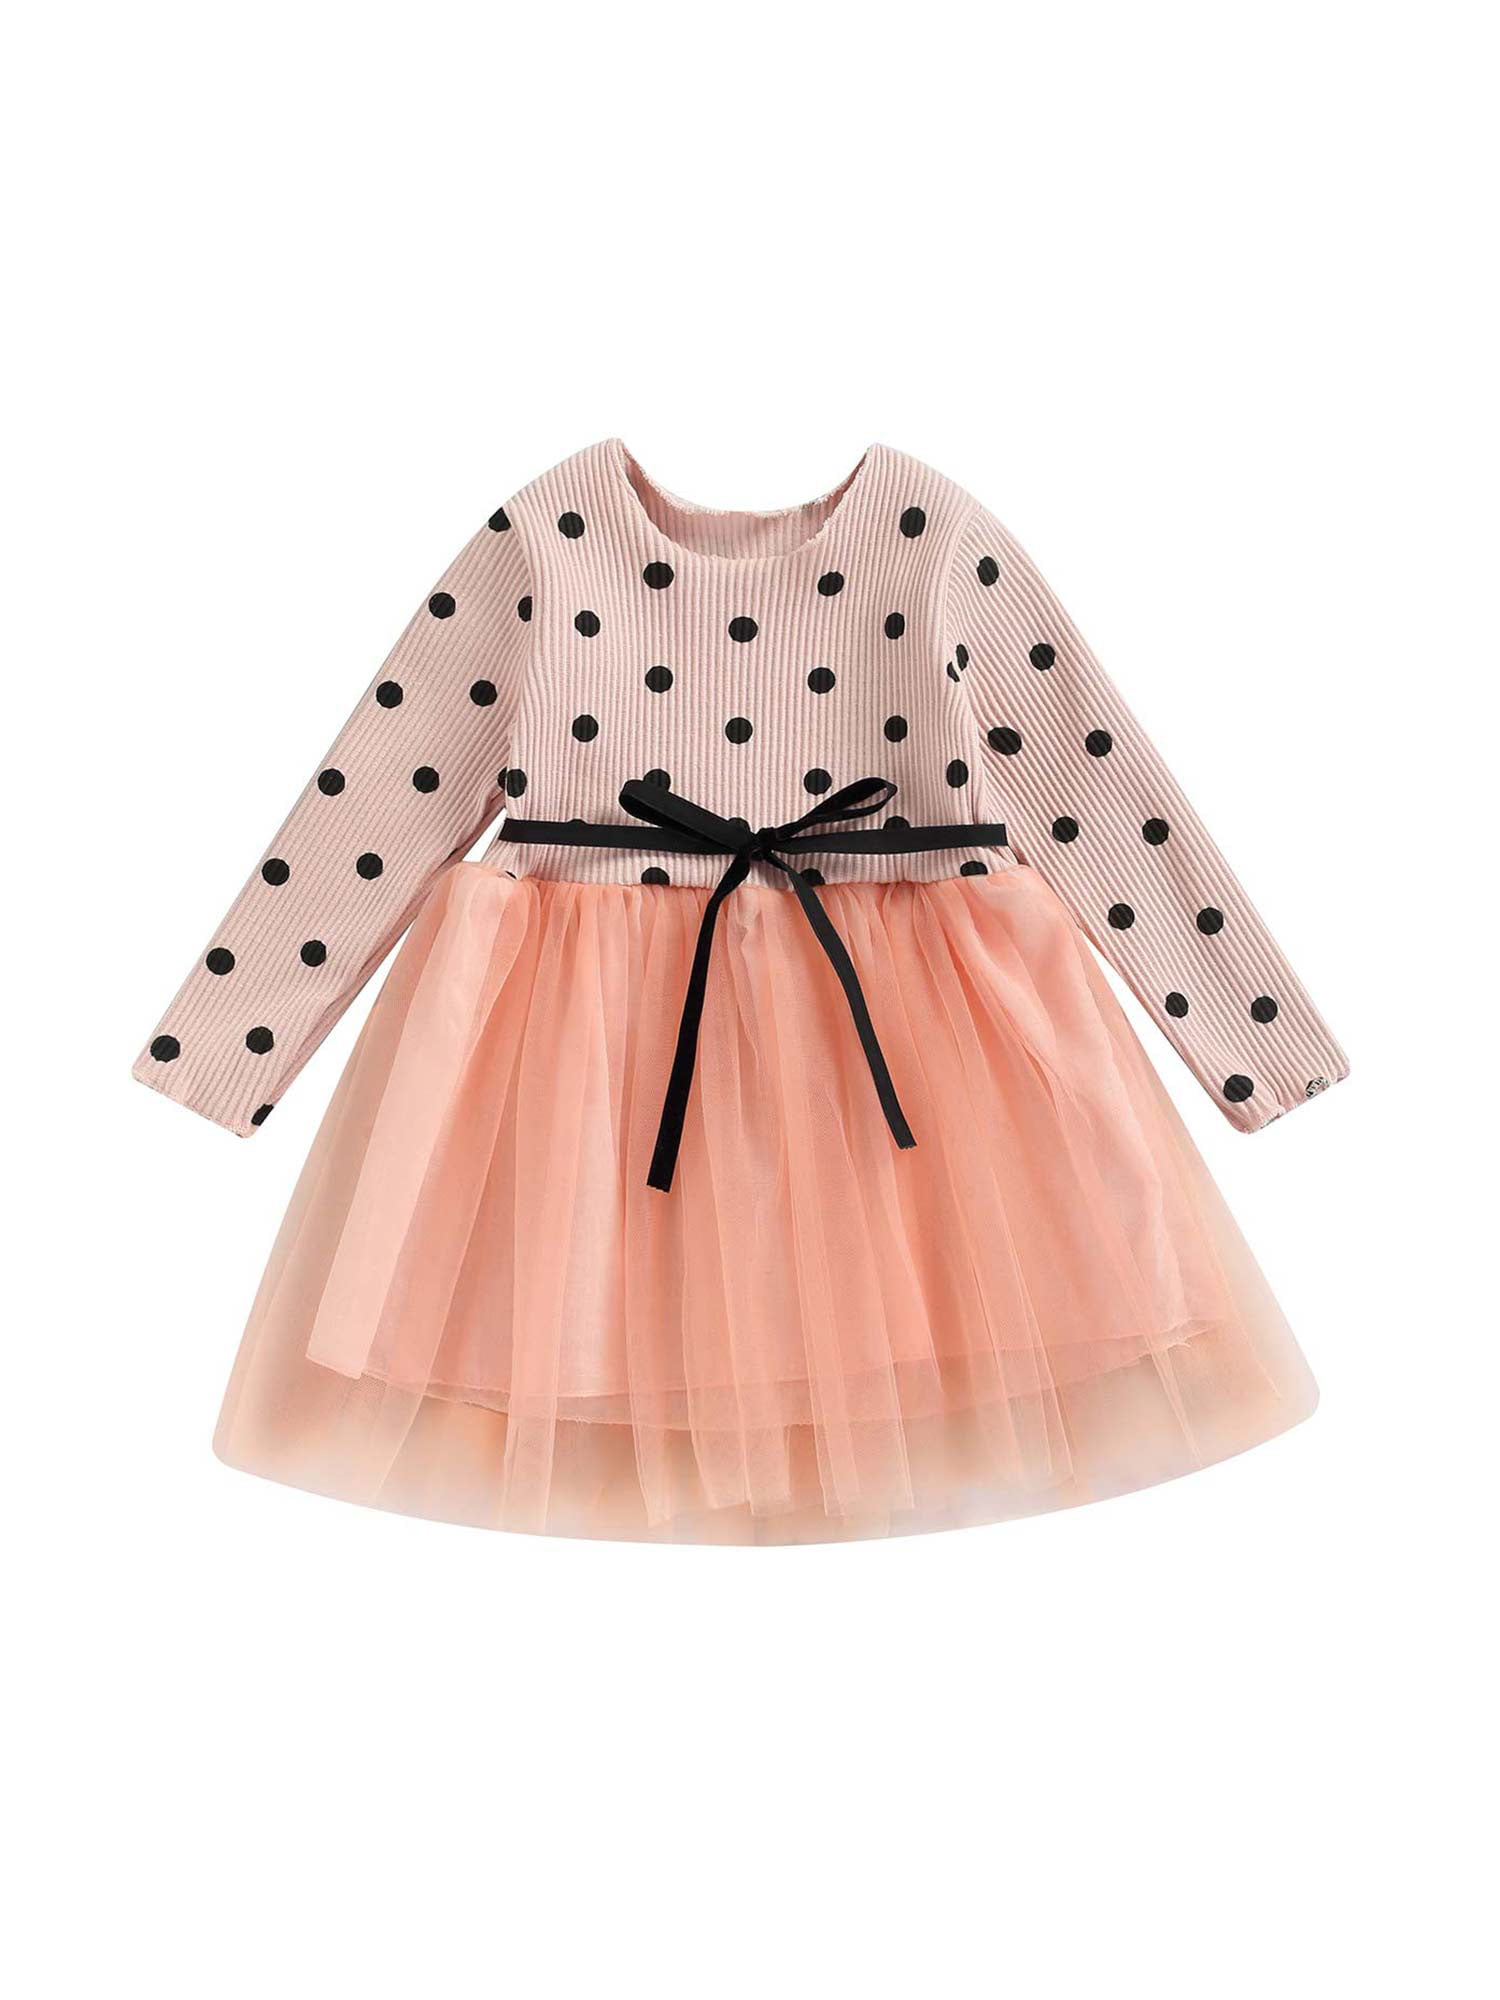 Kids Girls Princess Dress Long Sleeves Polka Dots Pattern Birthday Party Dress